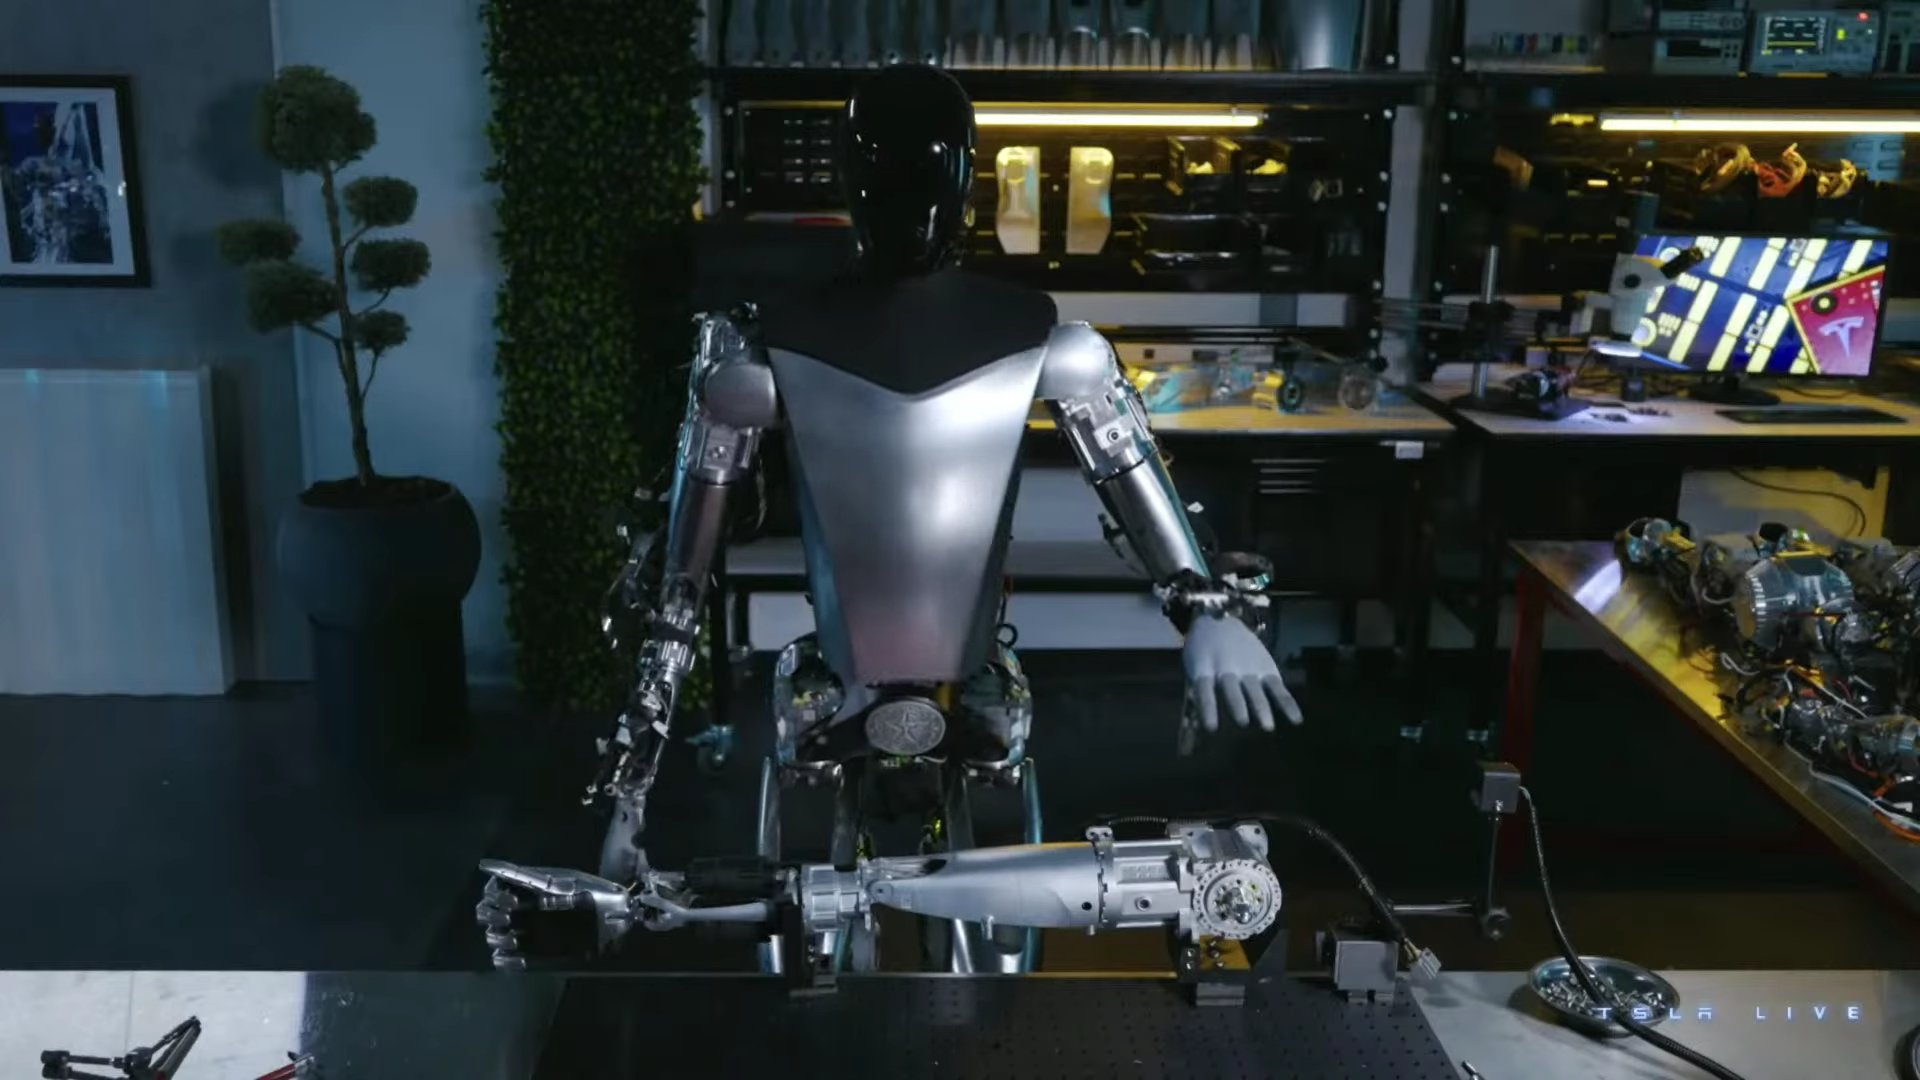 Tesla demonstruje proces hodowli humanoida Optimusa